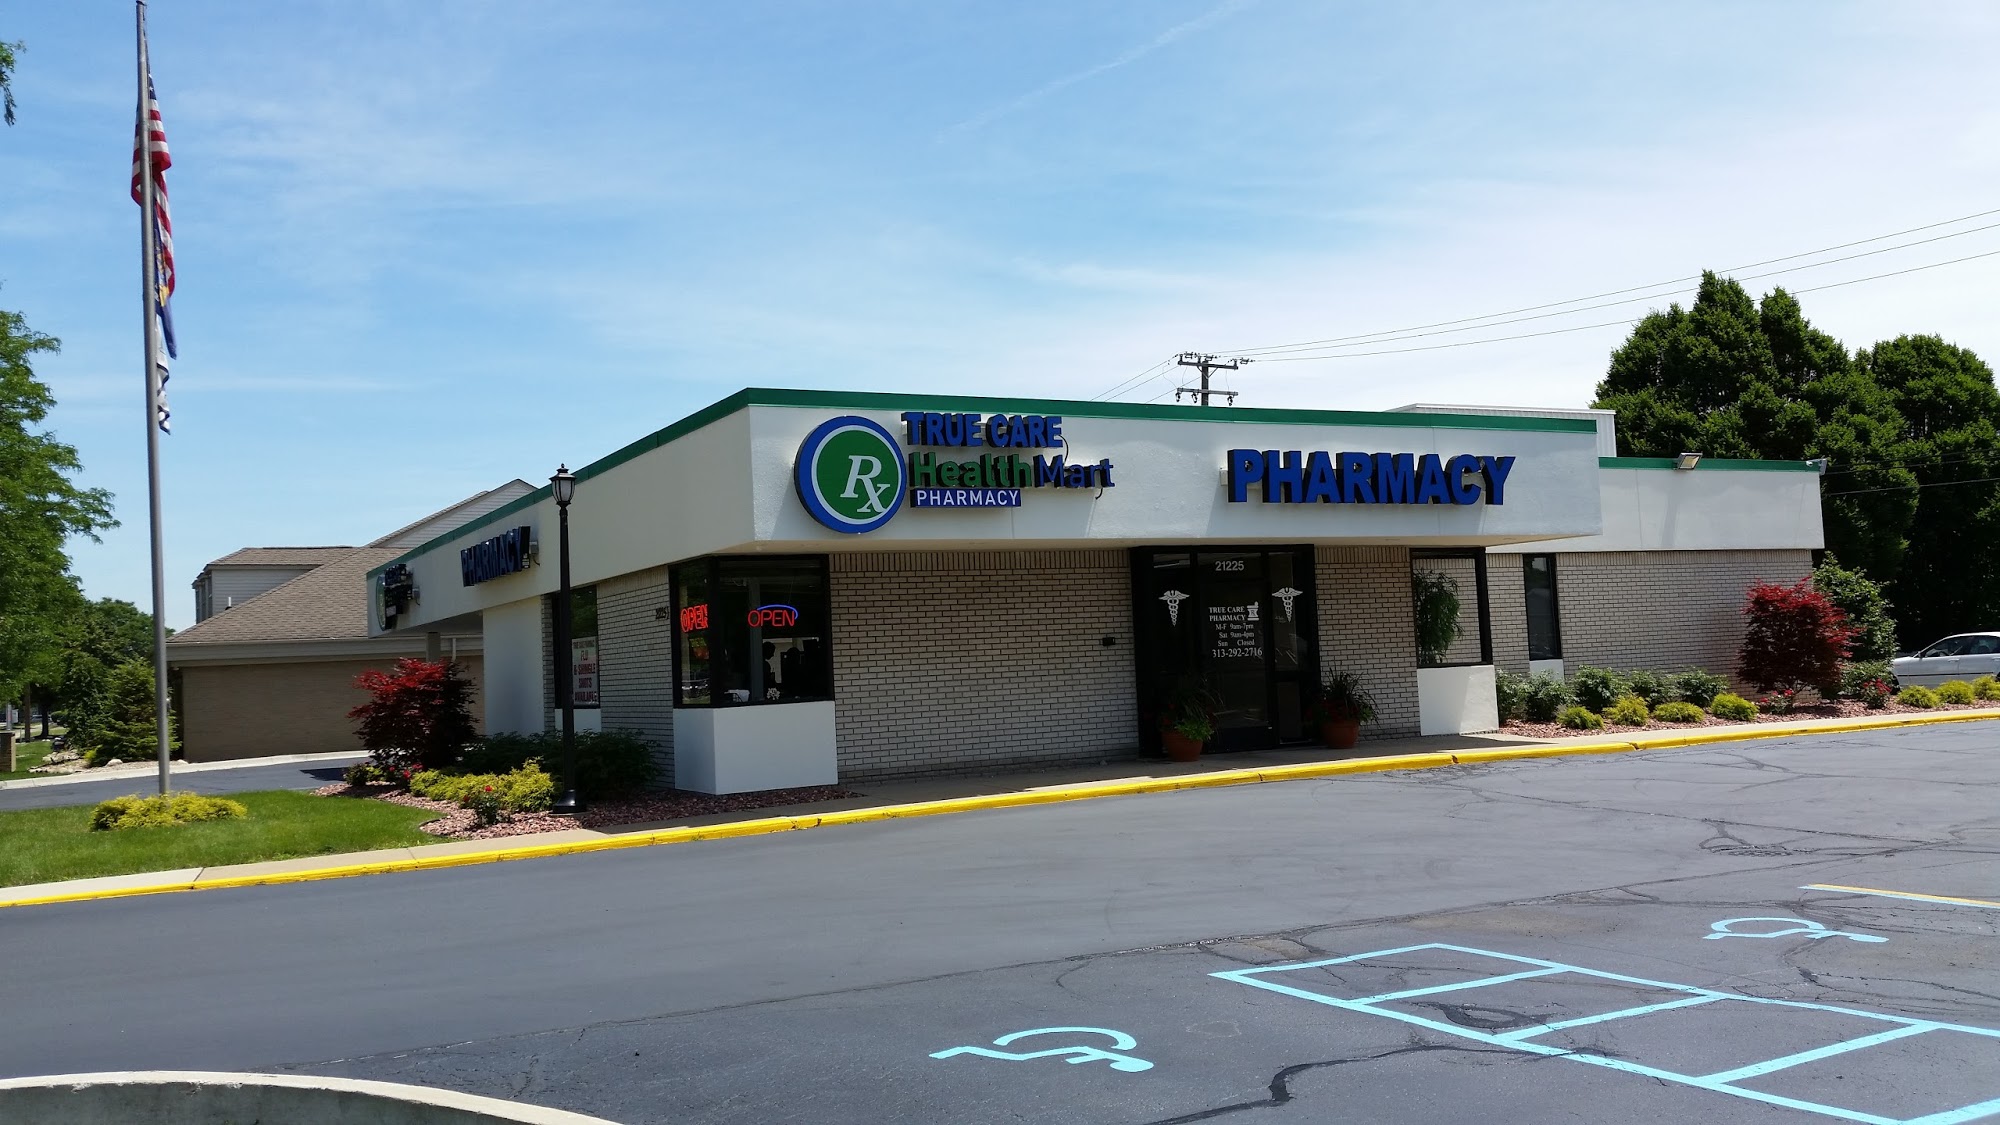 True Care Pharmacy